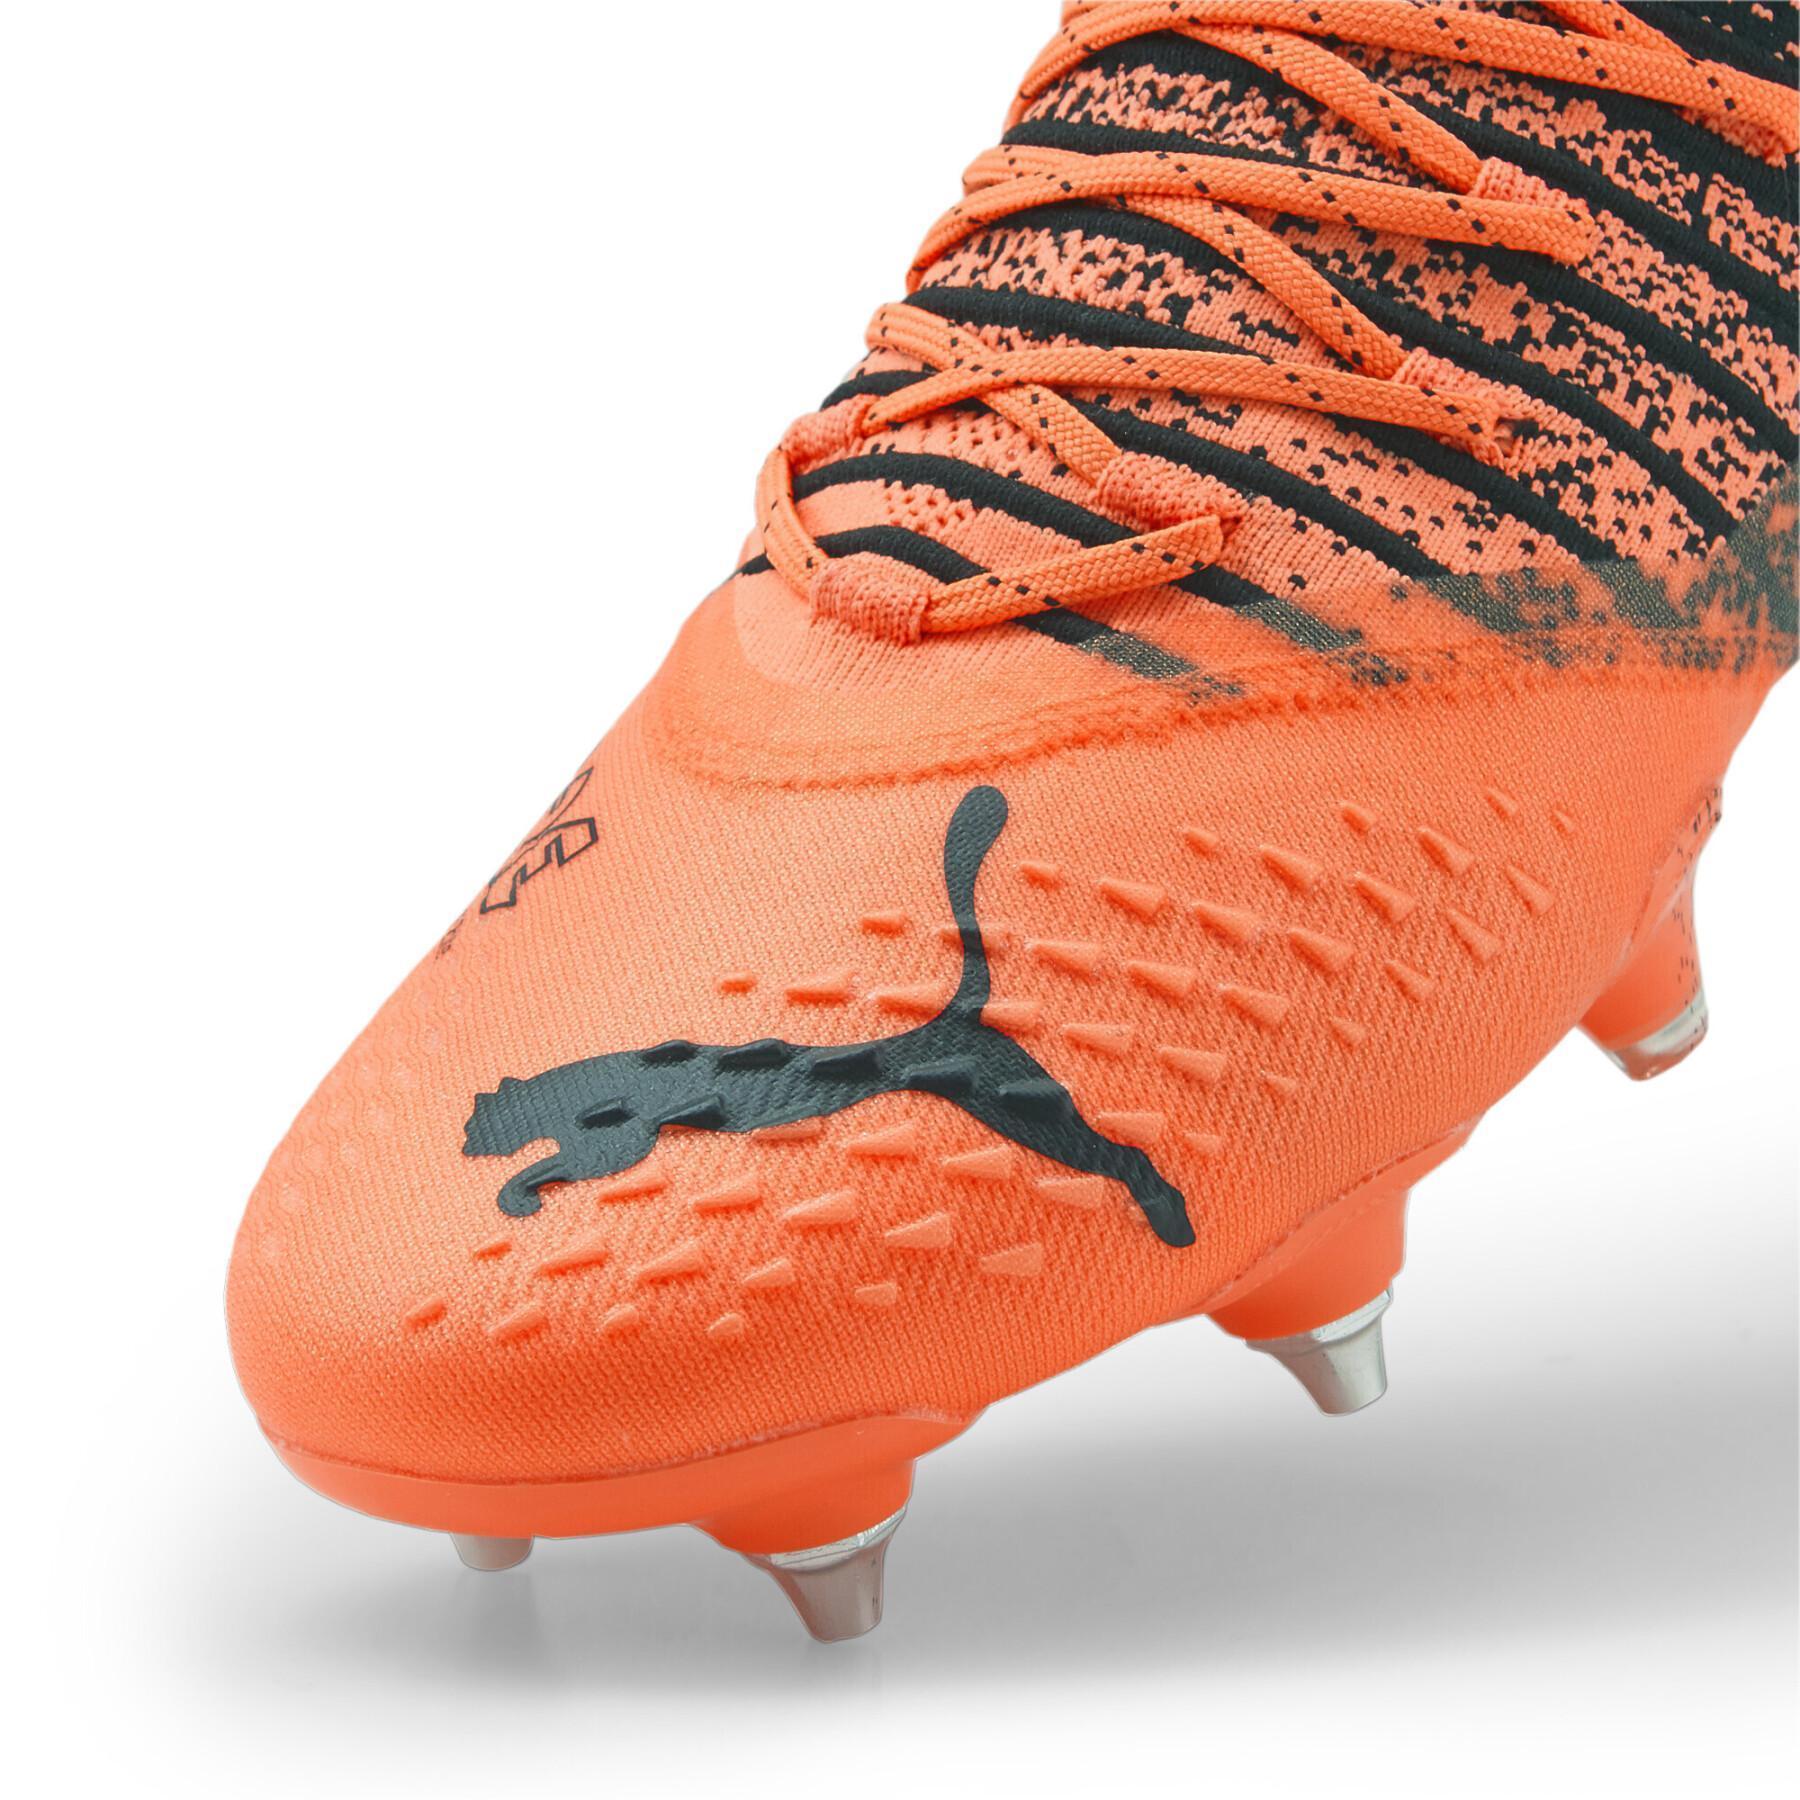 Botas de fútbol Puma Future Z 1.3 MxSG naranja, negro